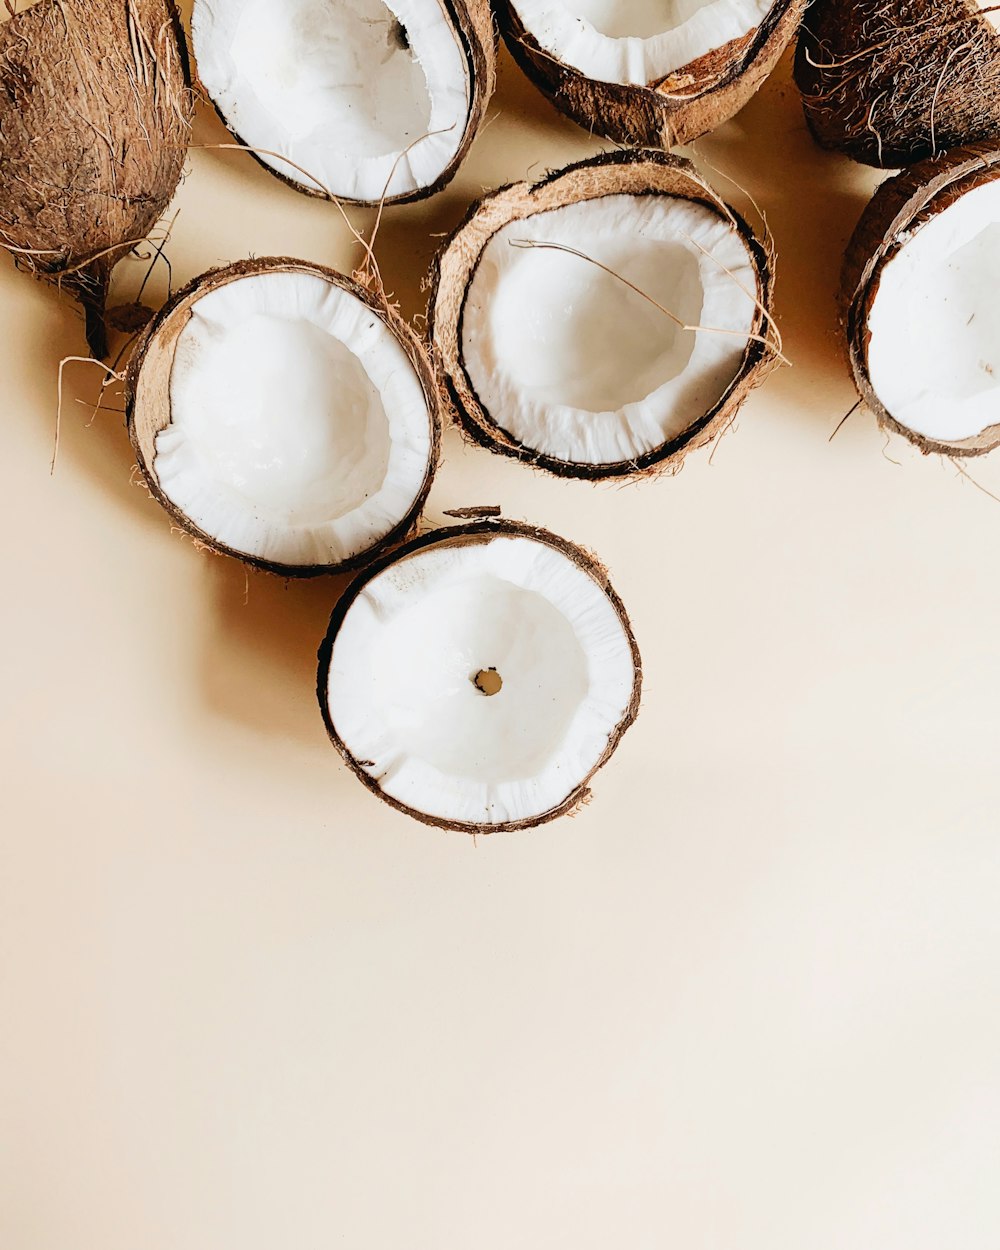 noci di cocco su superficie bianca